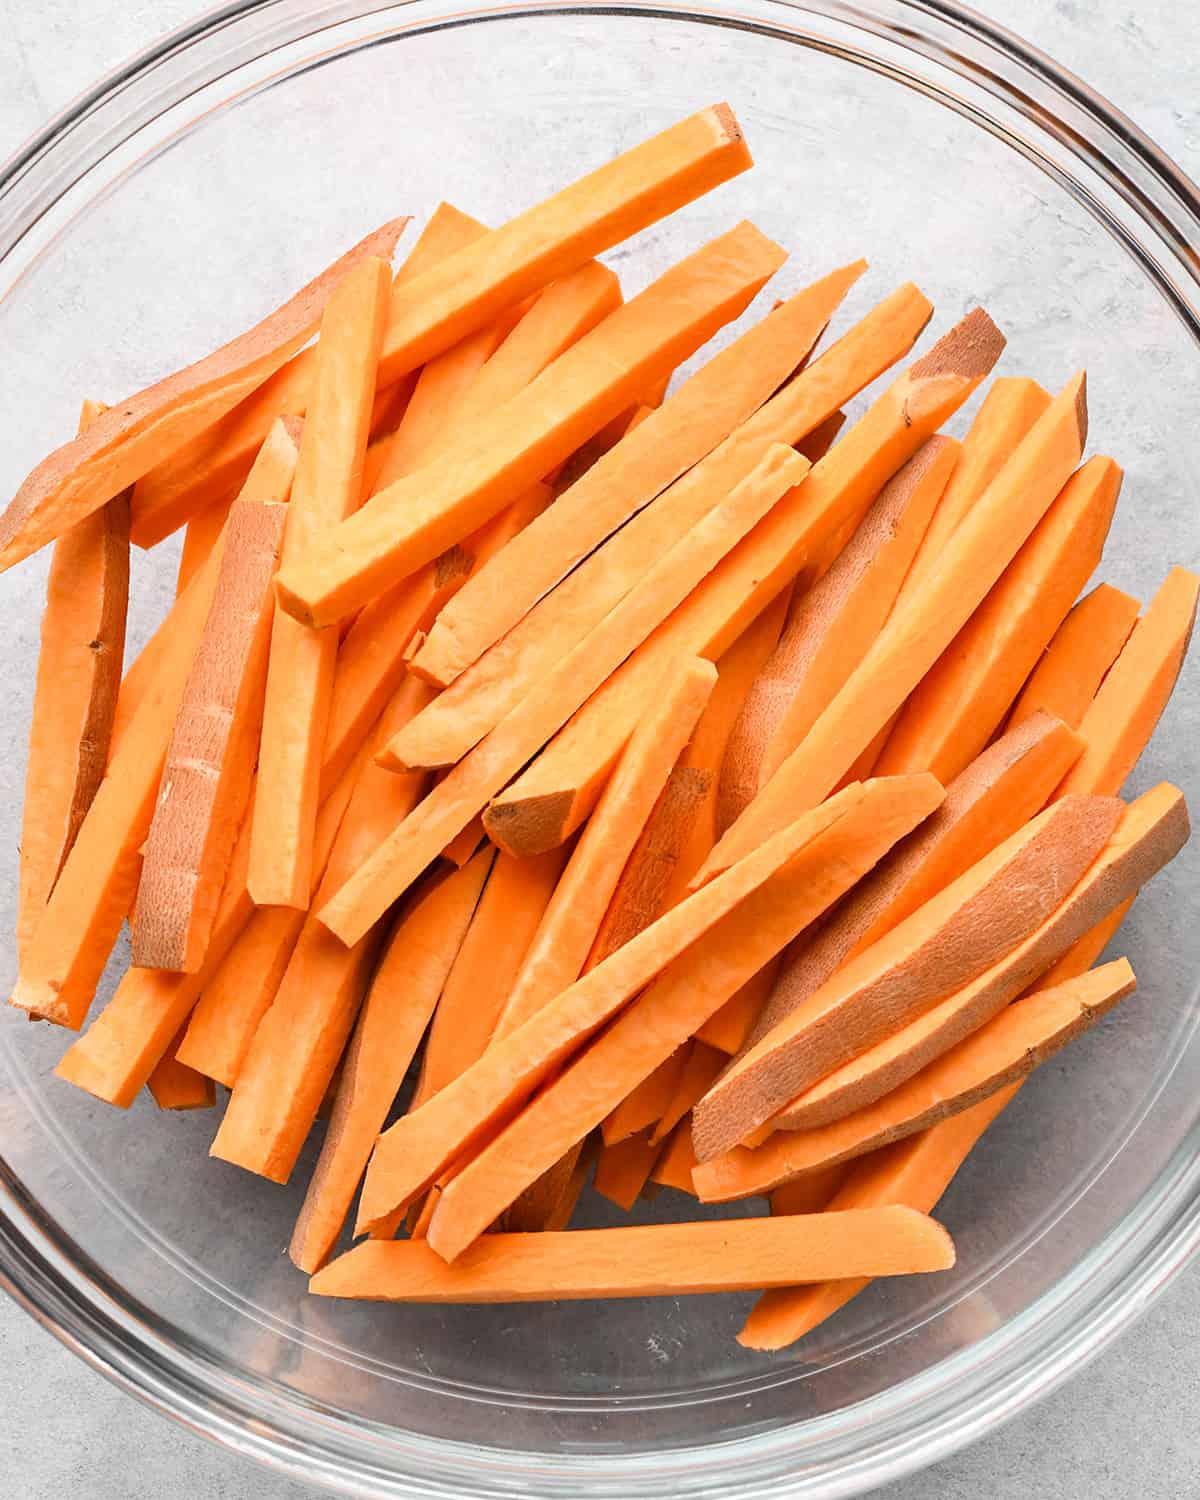 sweet potatoes cut into matchsticks to make sweet potato fries